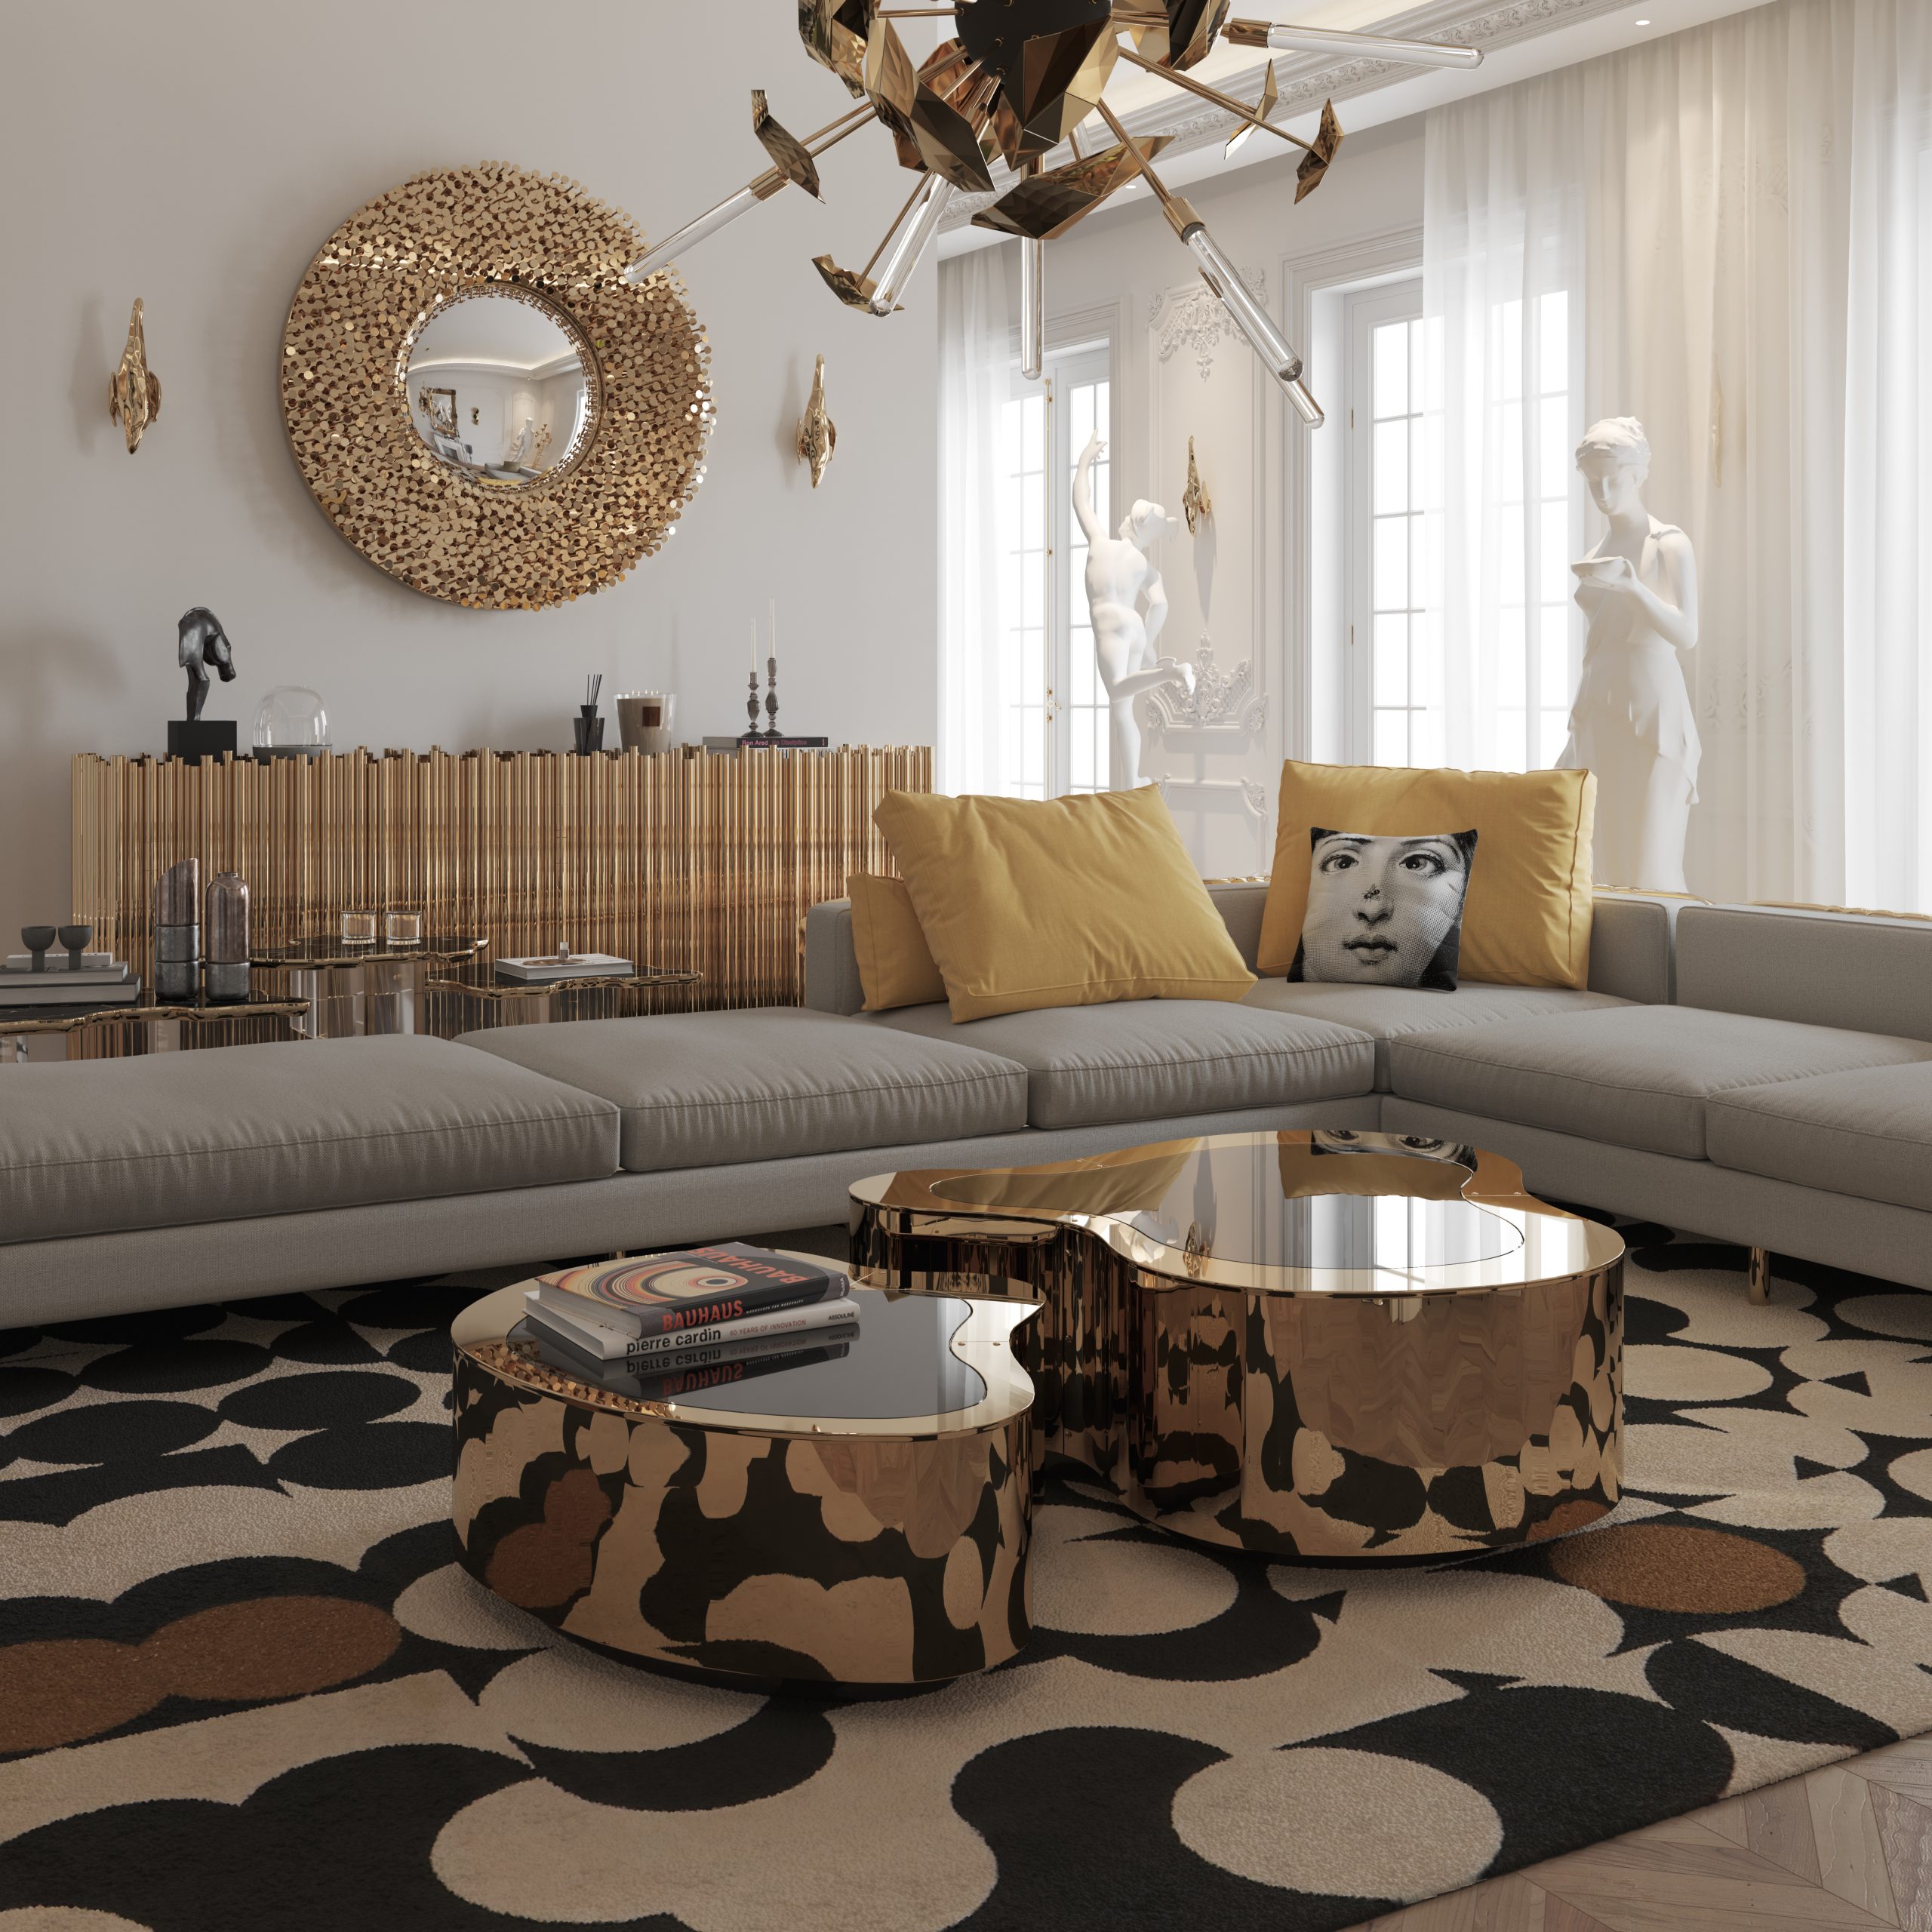 Kelly Hoppen - The Best Home Decor Ideas